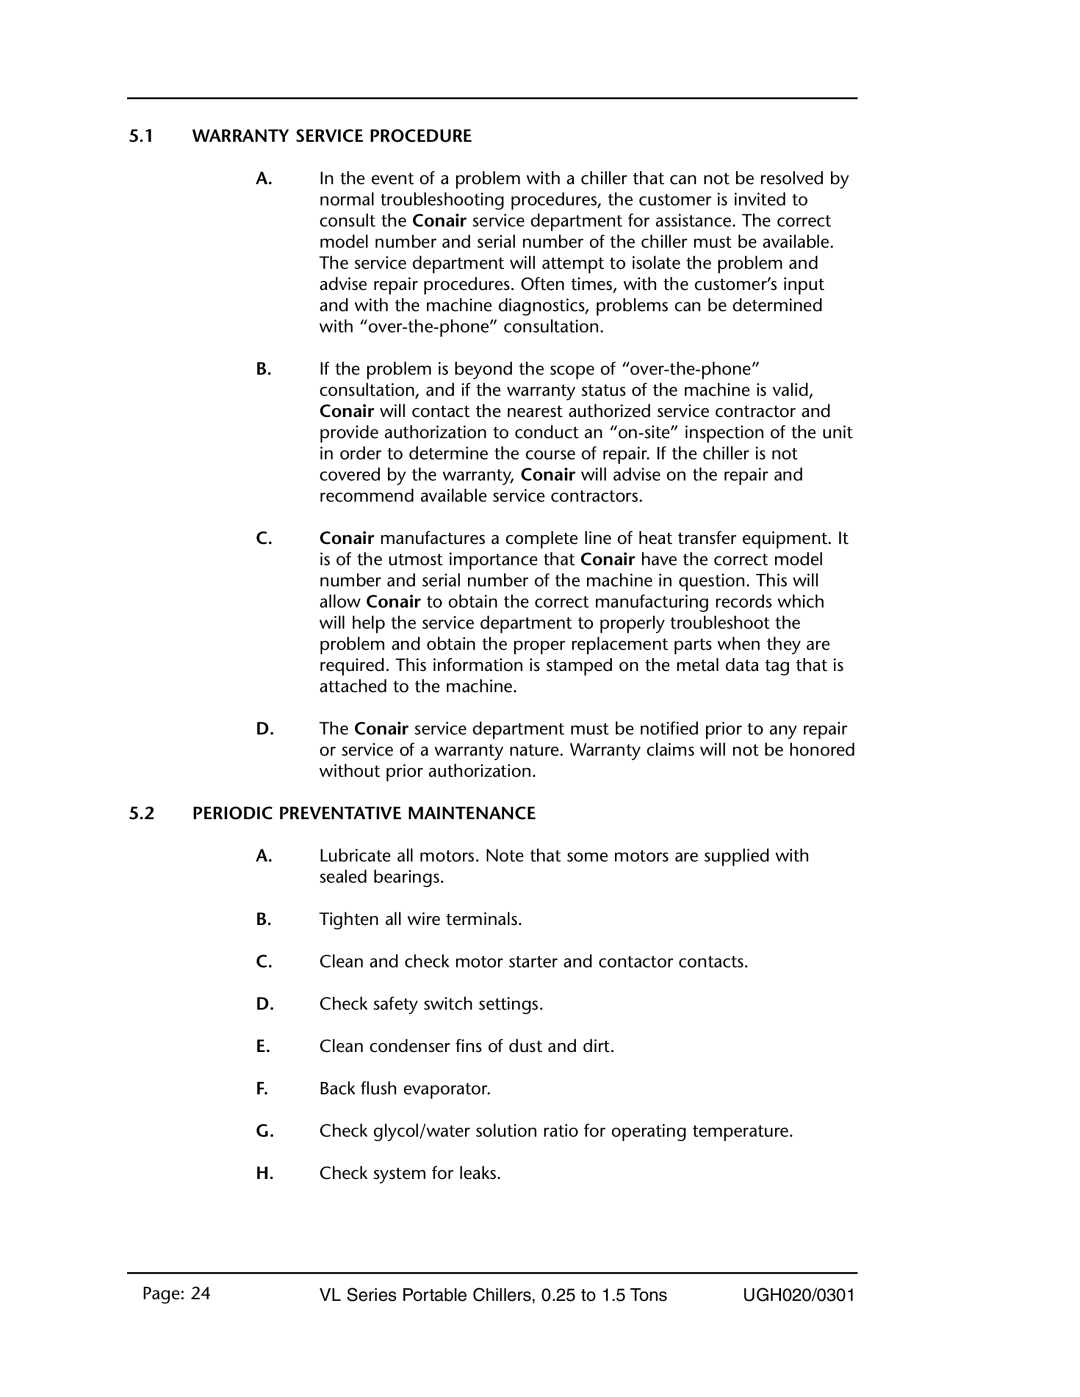 Conair VL Series manual 5.1WARRANTY SERVICE PROCEDURE, 5.2PERIODIC PREVENTATIVE MAINTENANCE 